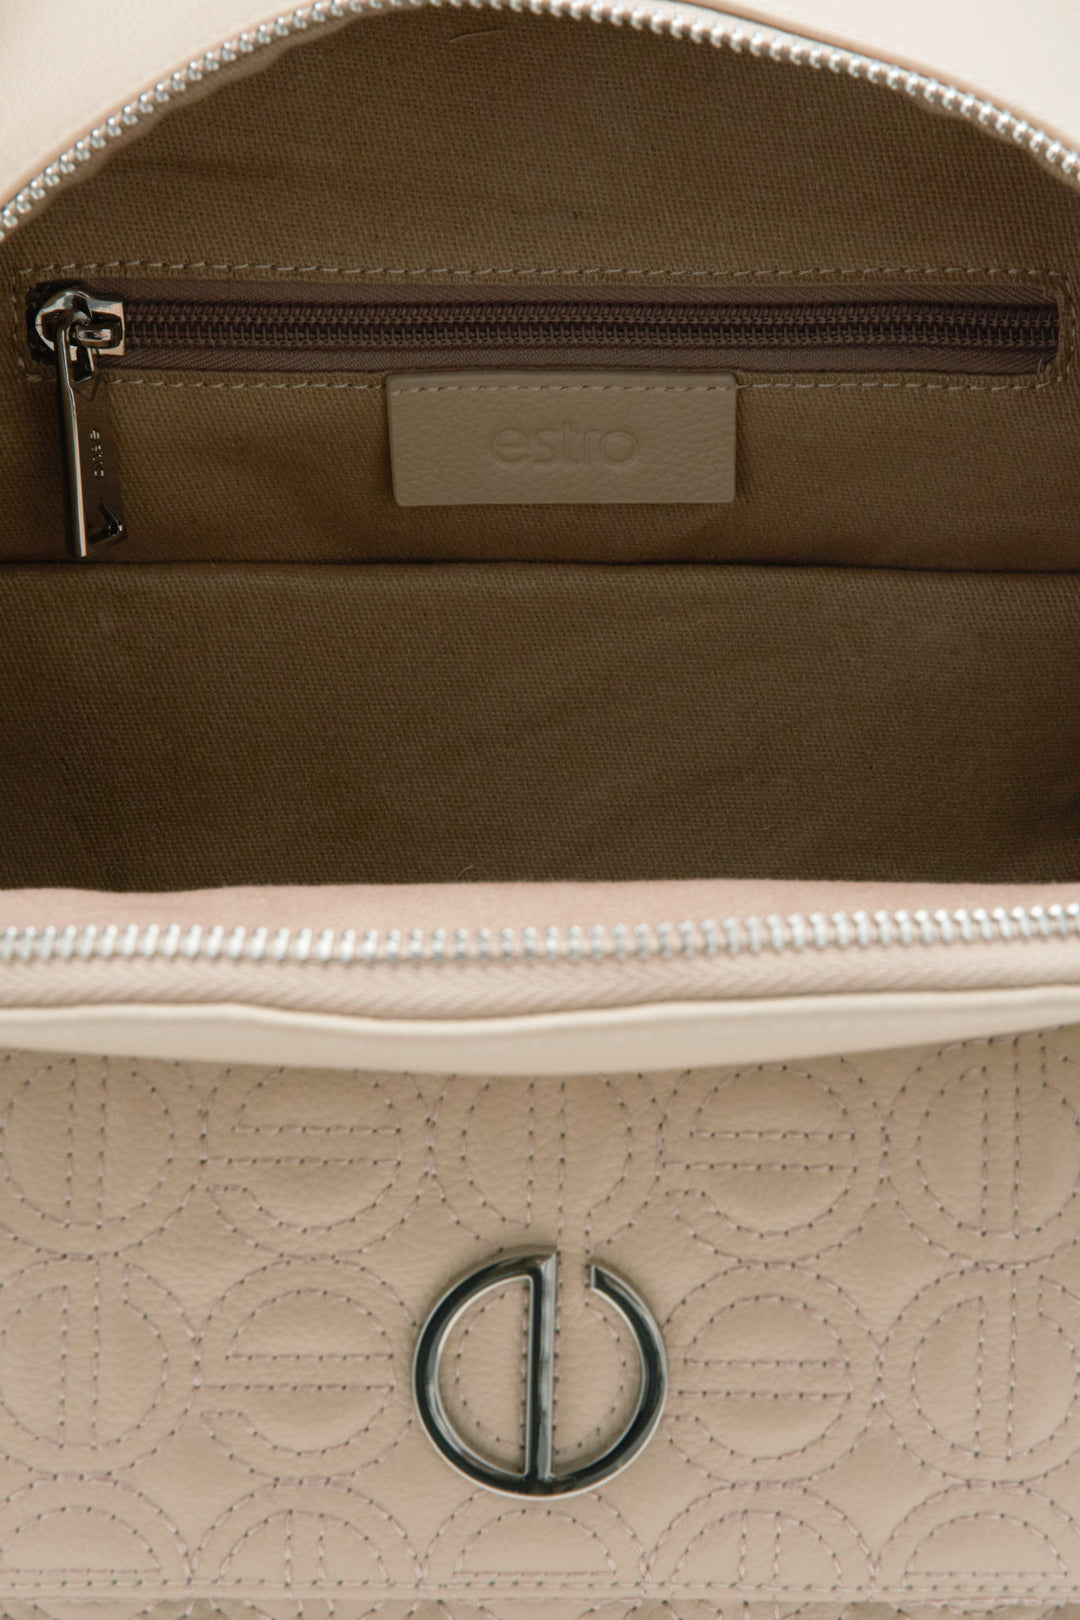 Light beige Estro women's backpack - close-up on the internal pocket.